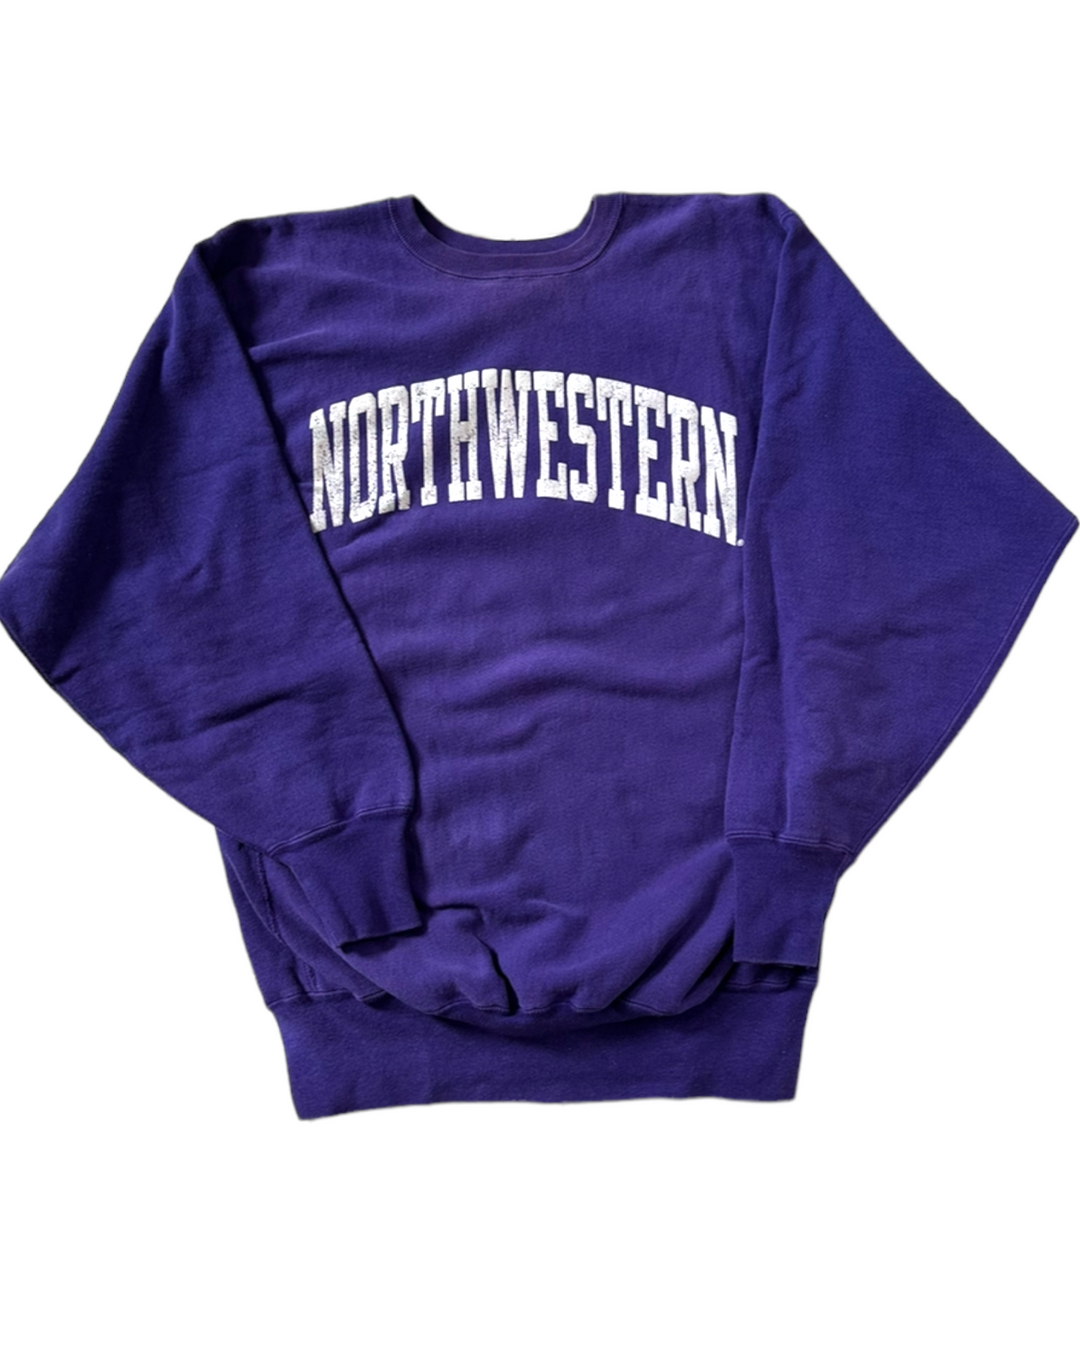 Northwestern Rare Vintage Champion Sweatshirt